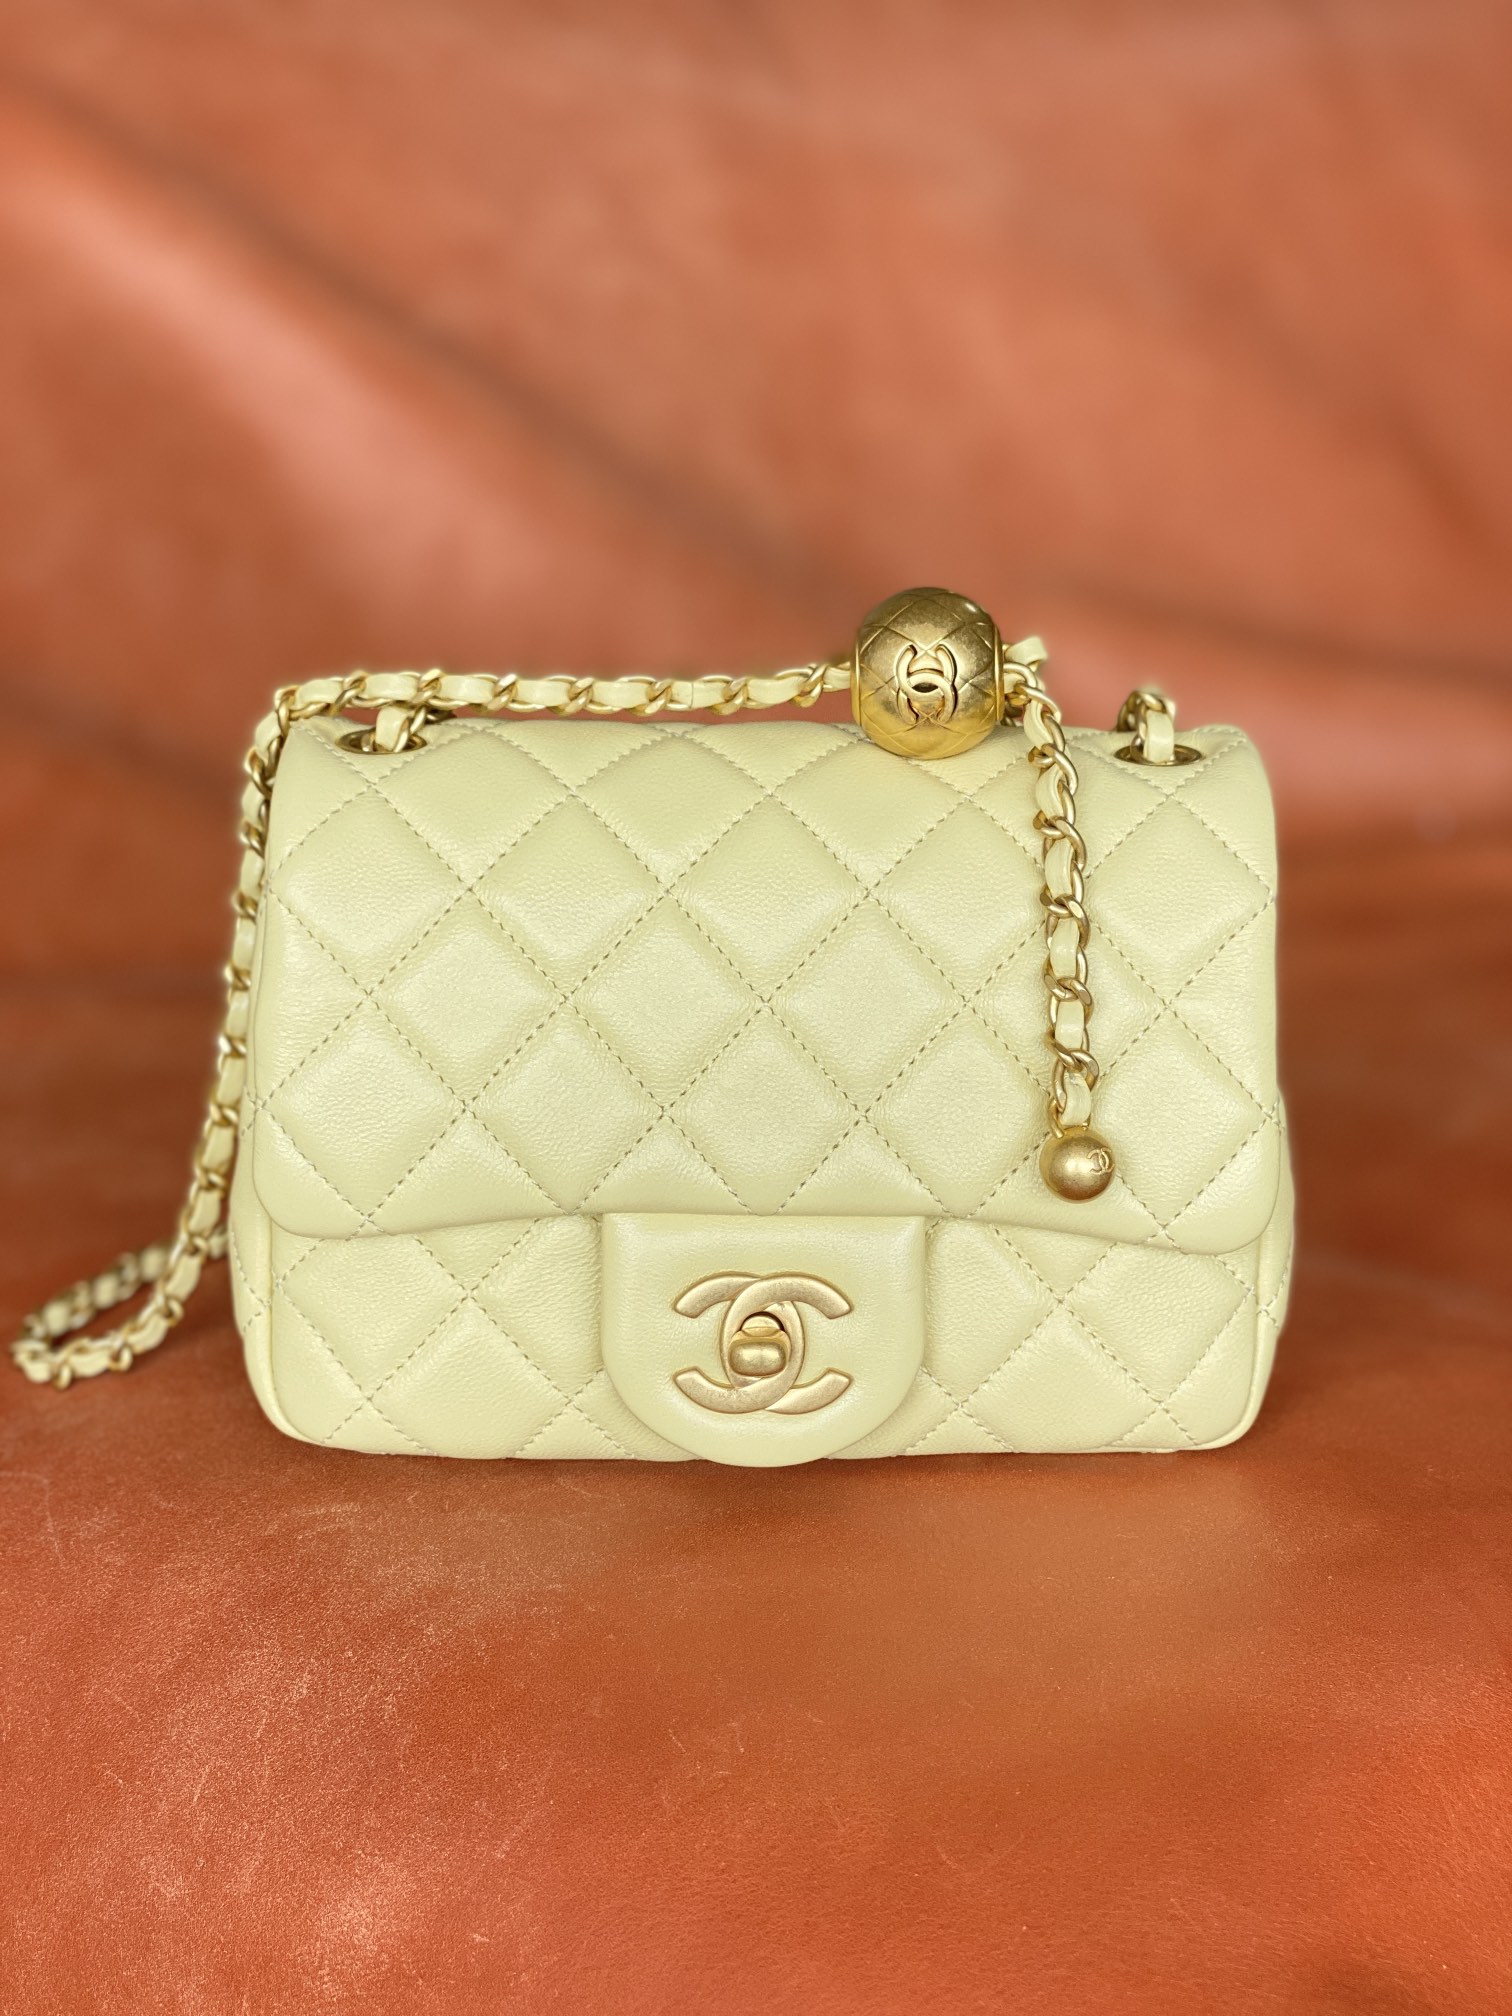 CHANEL Enamel Pearl Coco Chanel Bag Charm Gold 244472  FASHIONPHILE